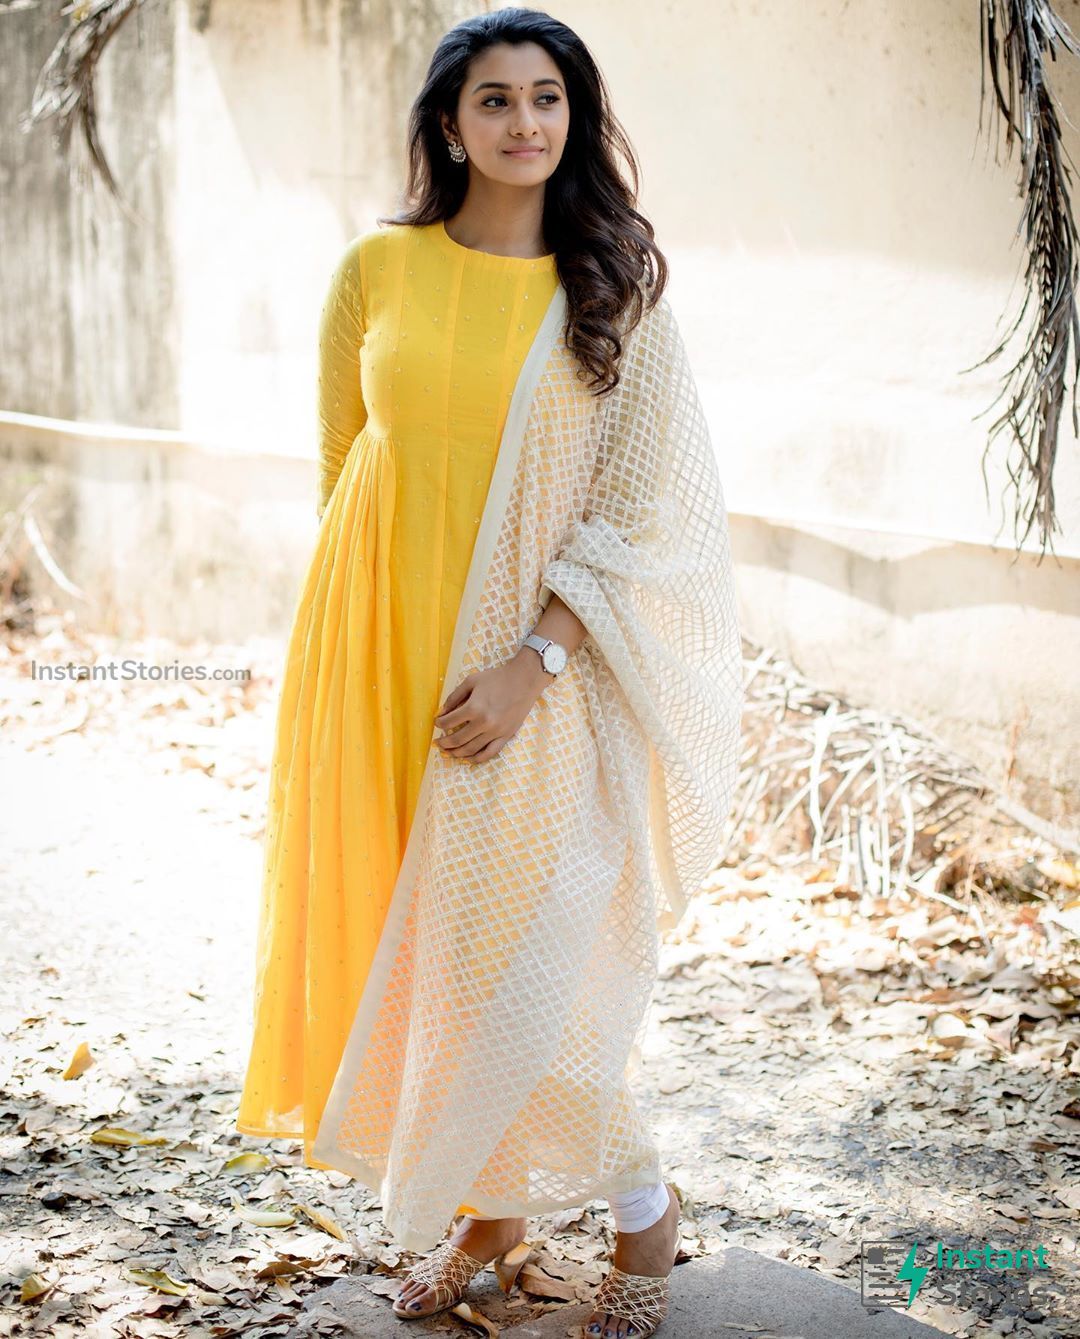 Priya Bhavani Shankars Hot Photoshoot Pictures in White Saree (1080p) (7339) - Priya Bhavani Shankar